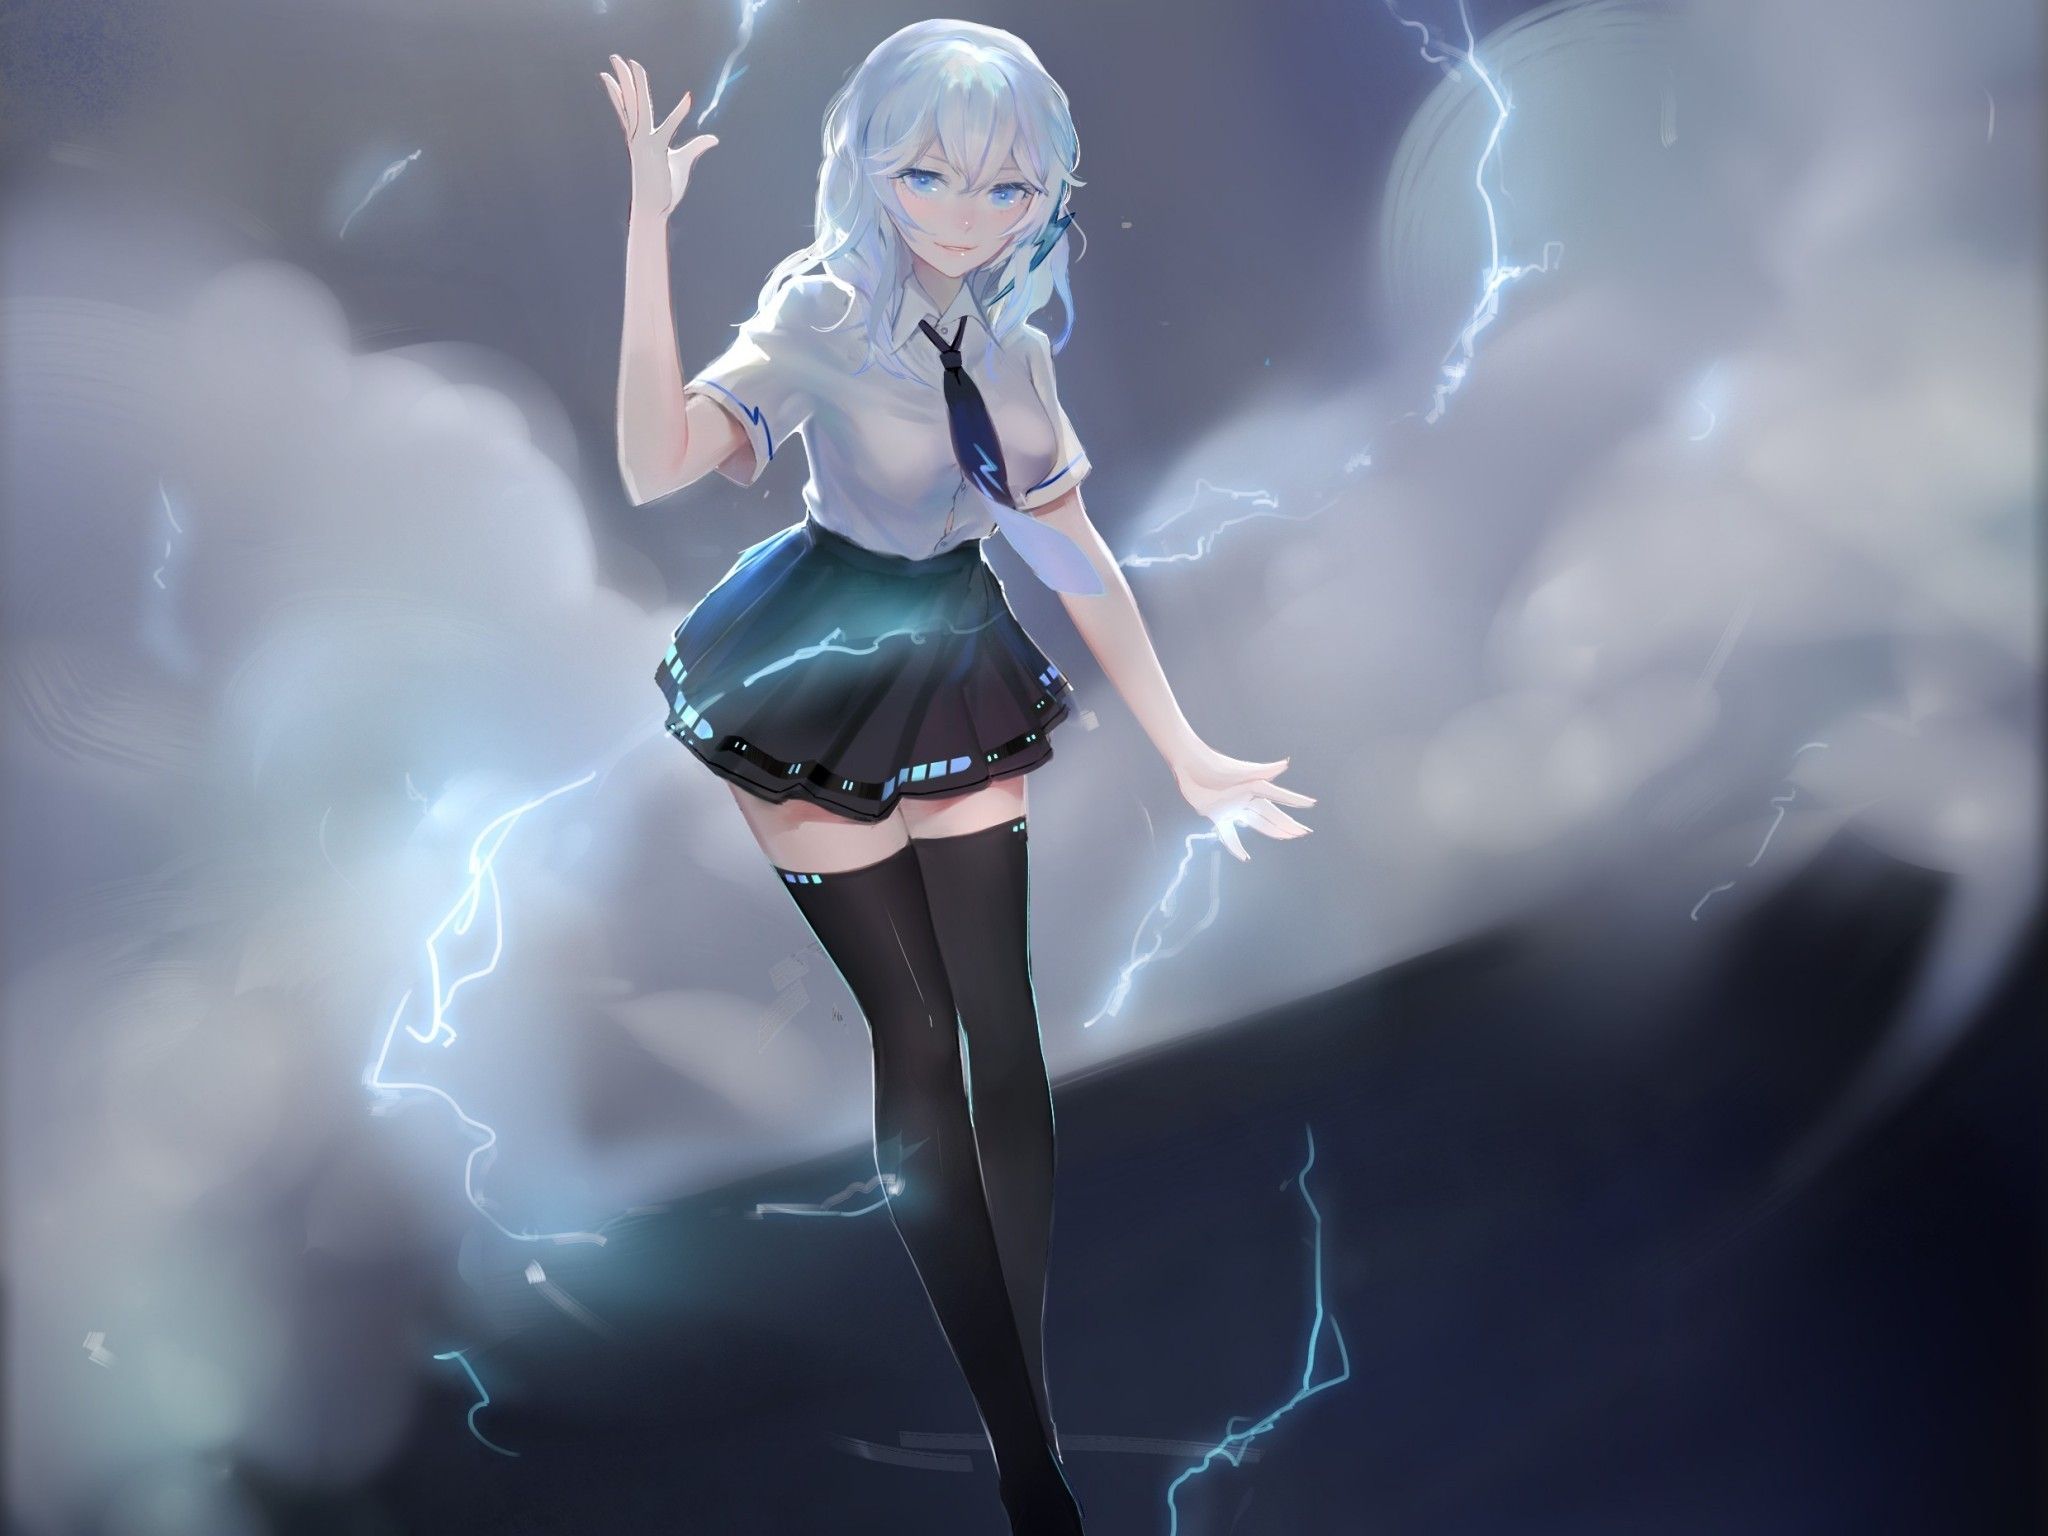 Download 2048x1536 Anime Girl, Magic, Lightning, Moon, Clouds, White Hair Wallpaper for Ainol Novo 9 Spark